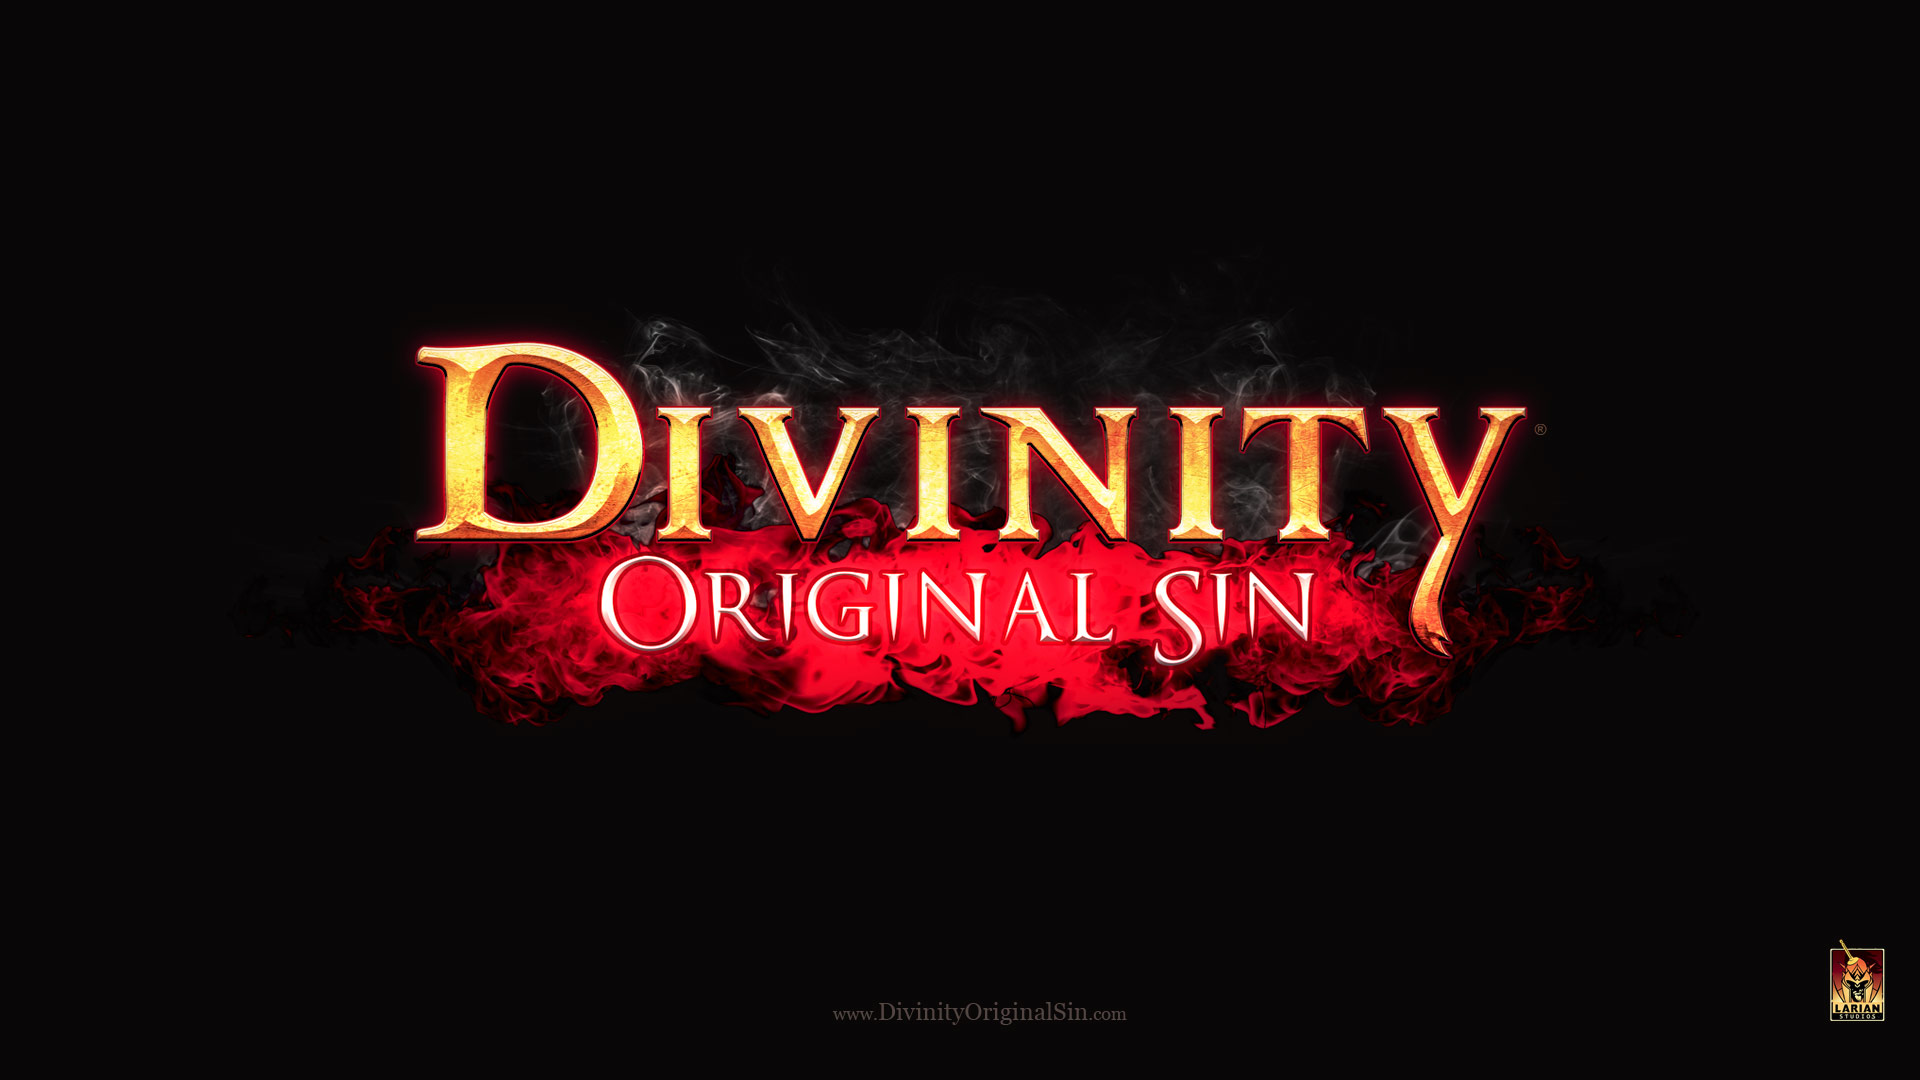 Divinity: Original Sin riceve due nuovi personaggi